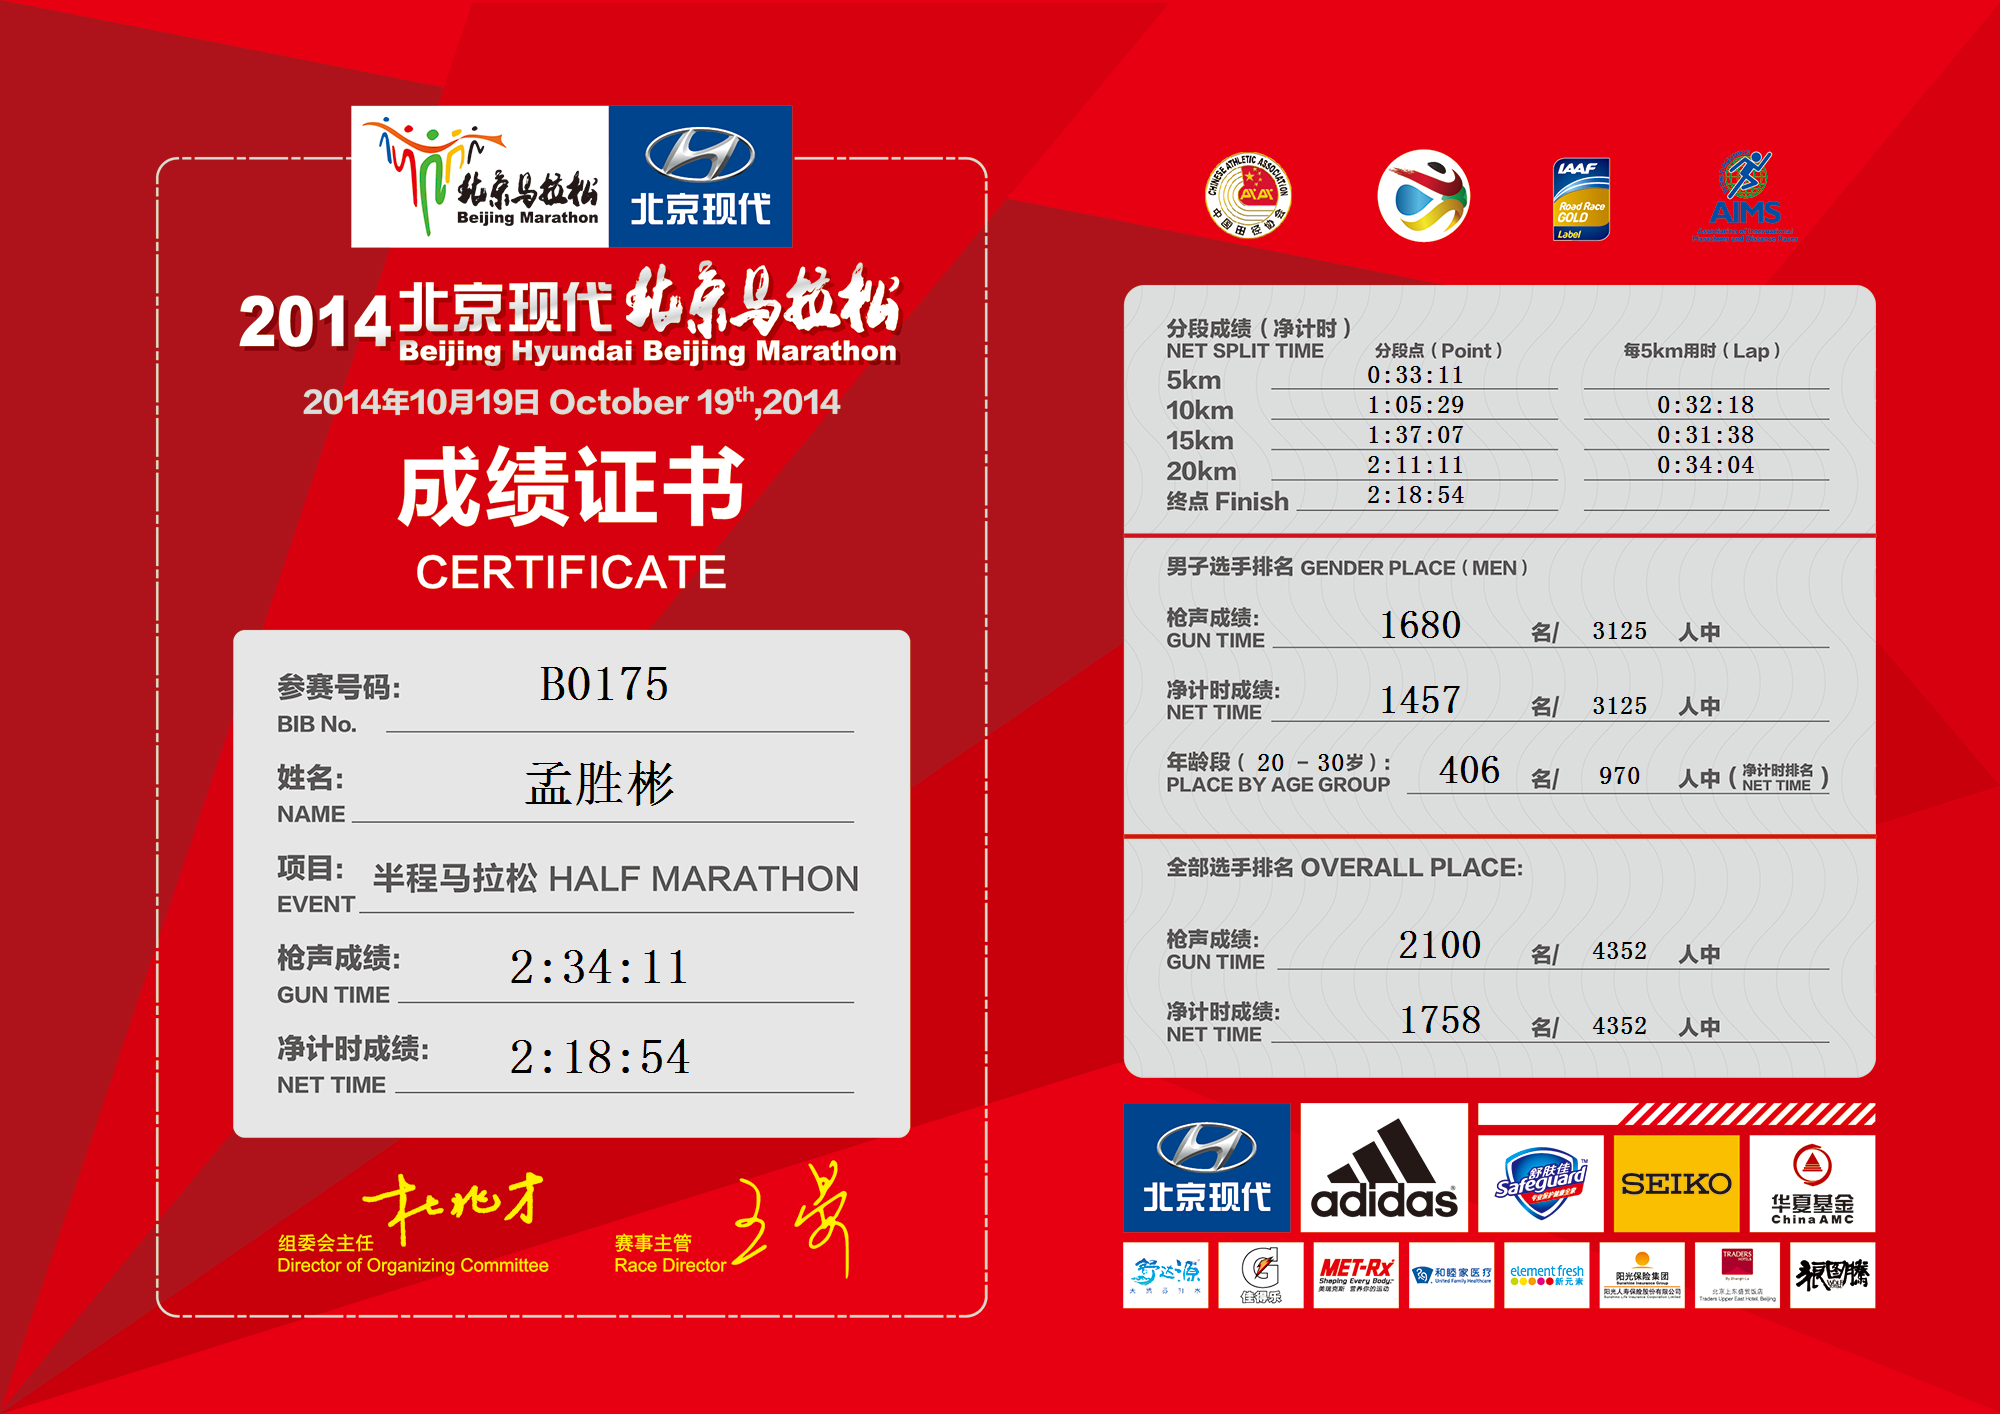 2018-09-16-half-marathon-certificate-2014.png